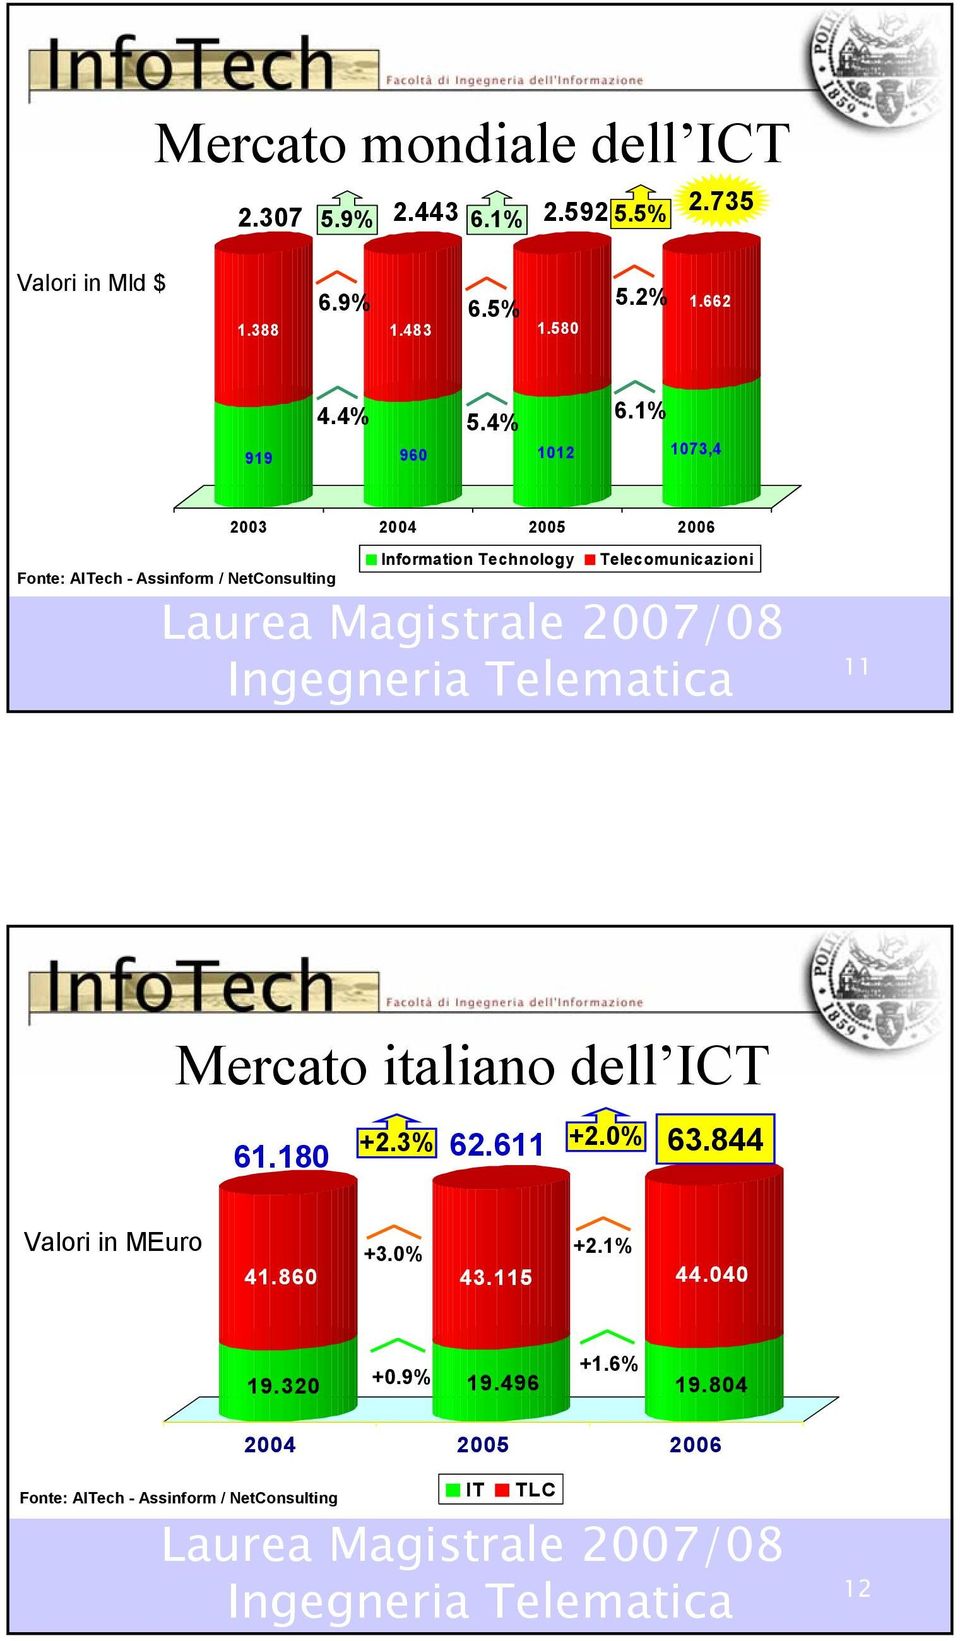 1% 1073,4 2003 2004 2005 2006 Fonte: AITech - Assinform / NetConsulting Information Technology Telecomunicazioni